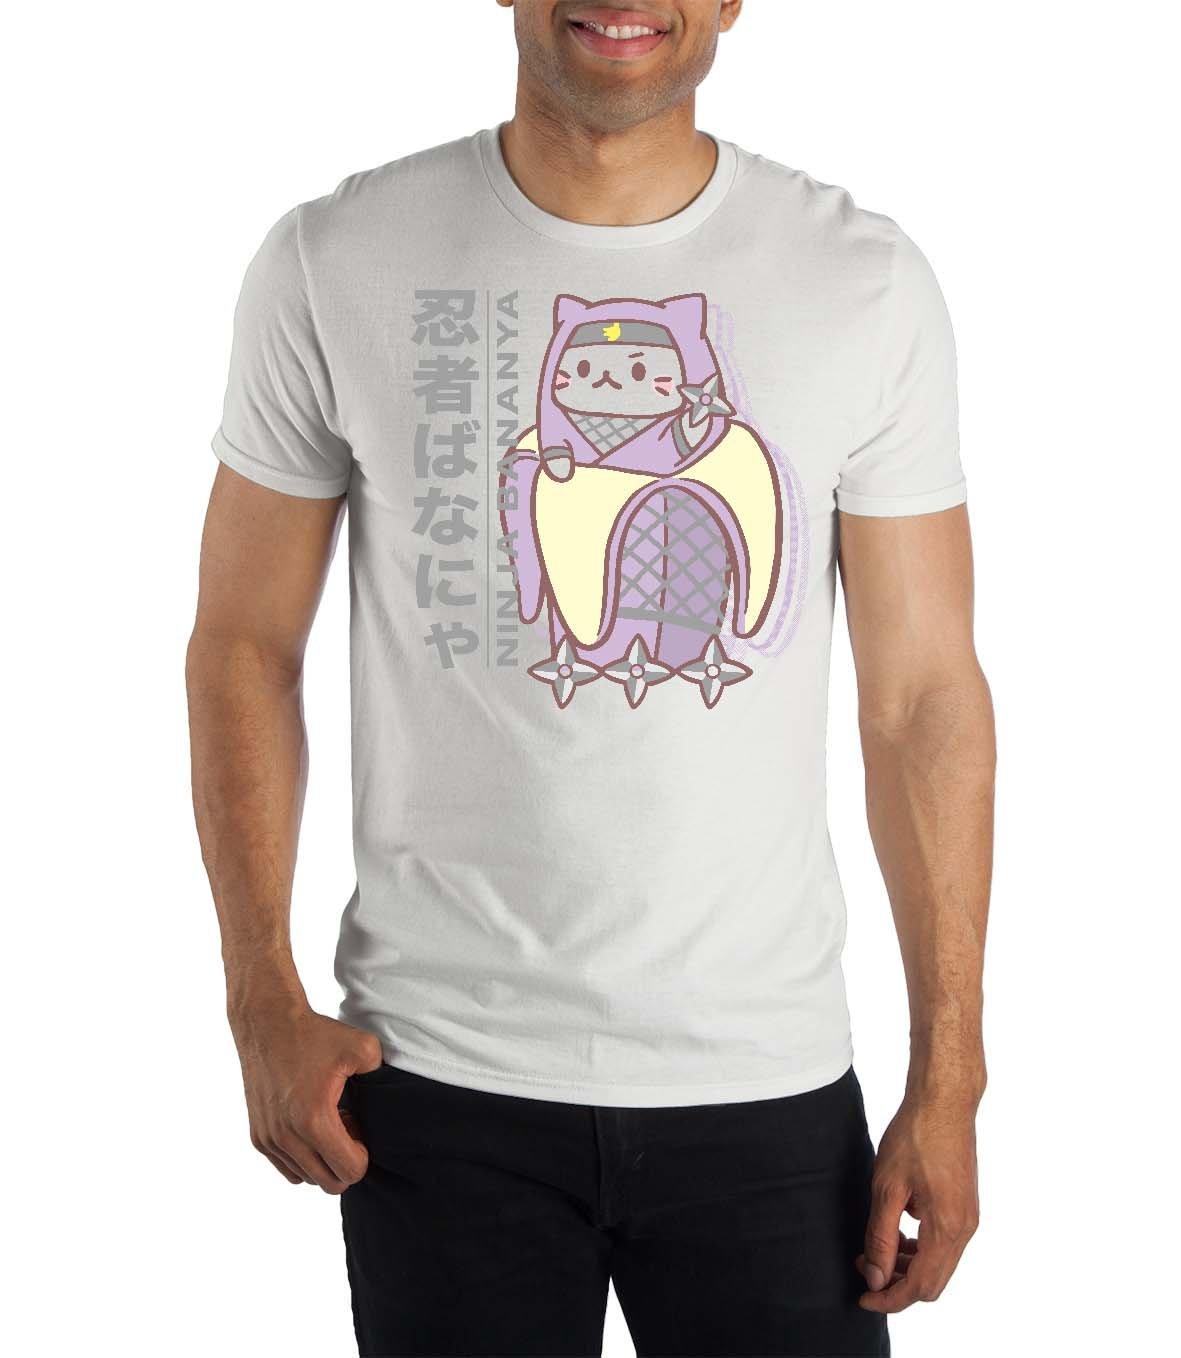 https://media.gamestop.com/i/gamestop/11202399/Bananya-Ninja-Kanji-Unisex-T-Shirt?$pdp$